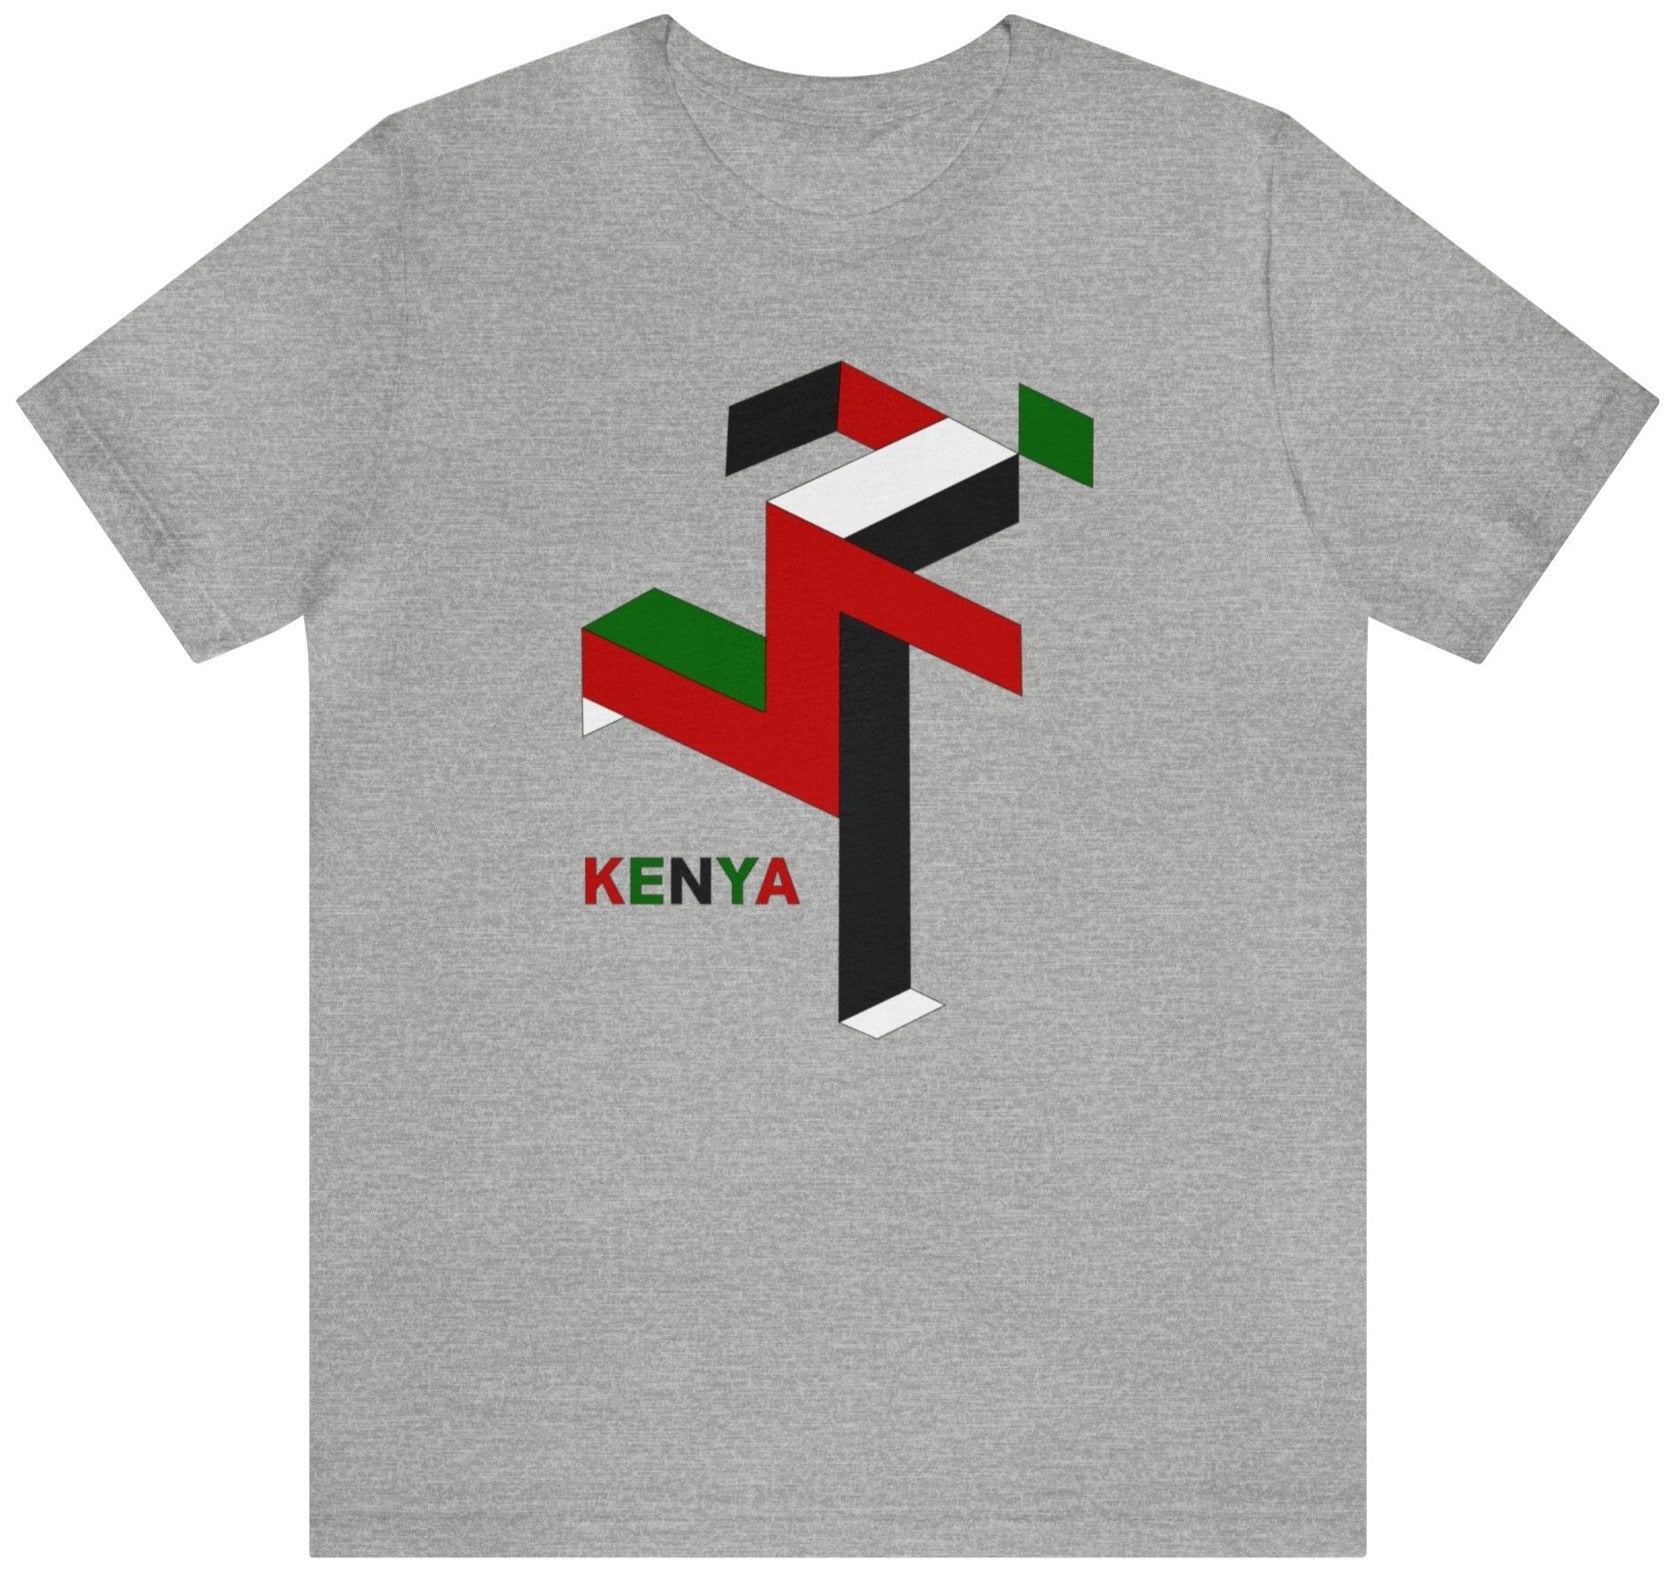 Kenya runner Olympics t shirt